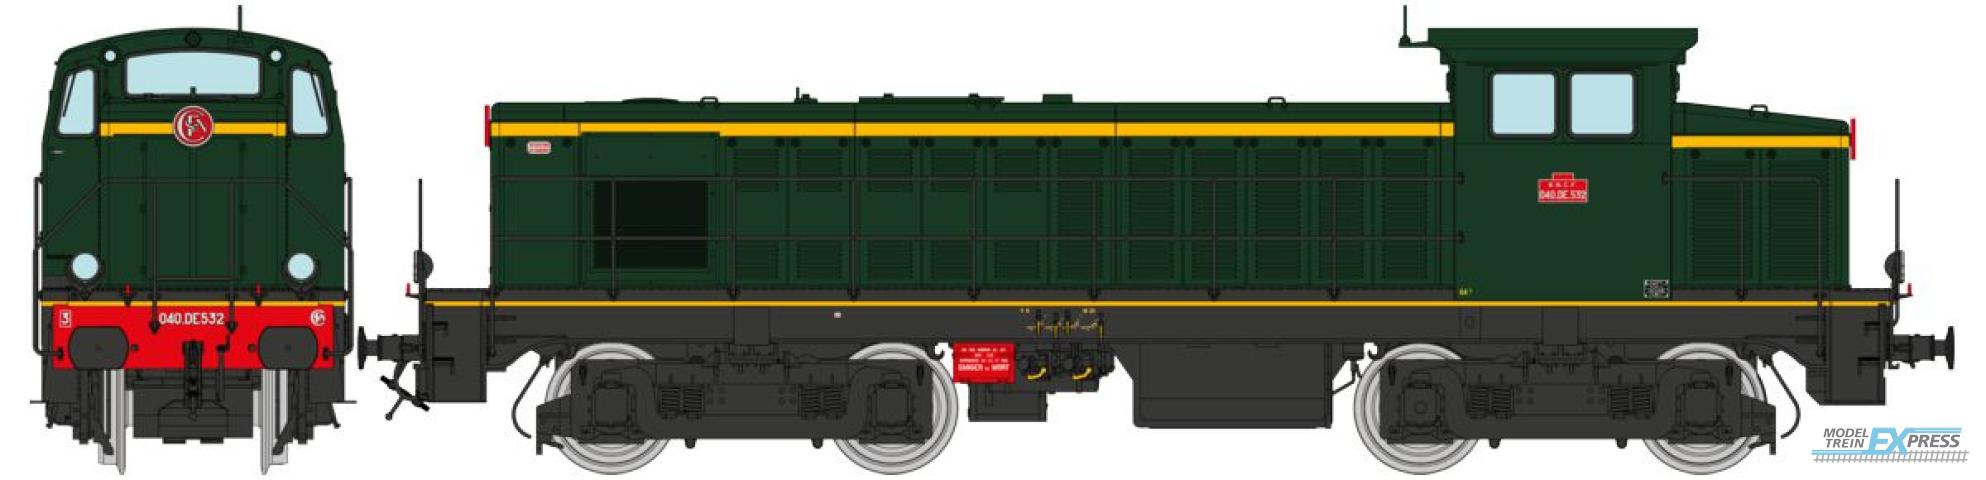 REE models JM-007 Diesel Locomotive 040 DE 532 Origin, West, Era  III - ANALOG